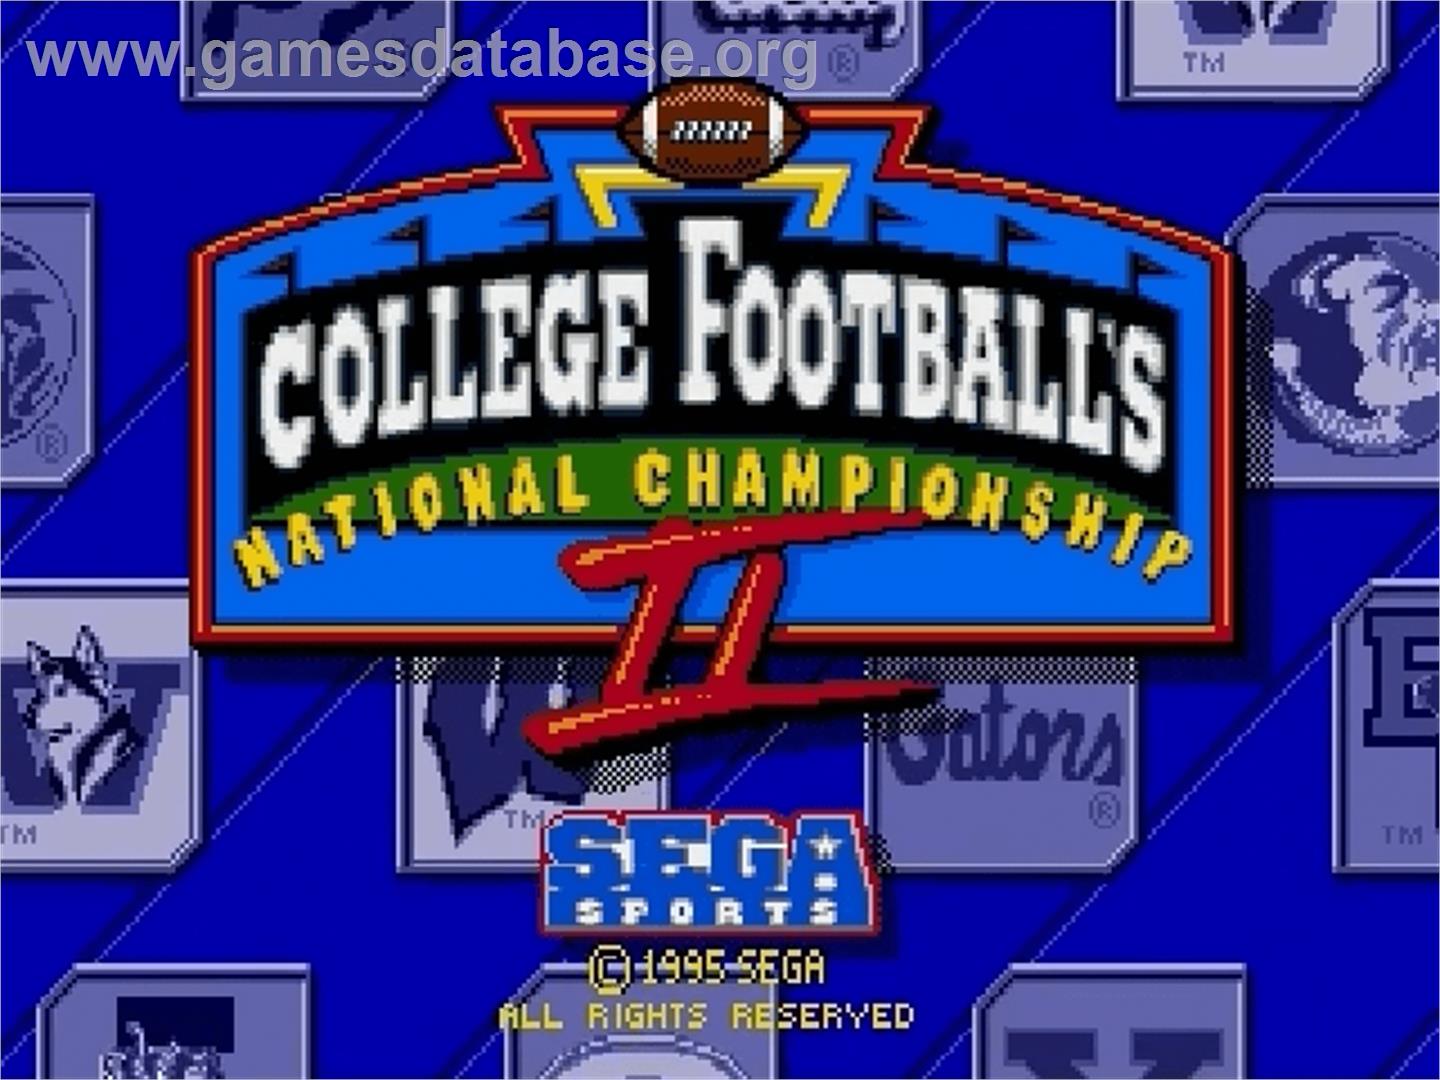 College Football's National Championship II - Sega Genesis - Artwork - Title Screen